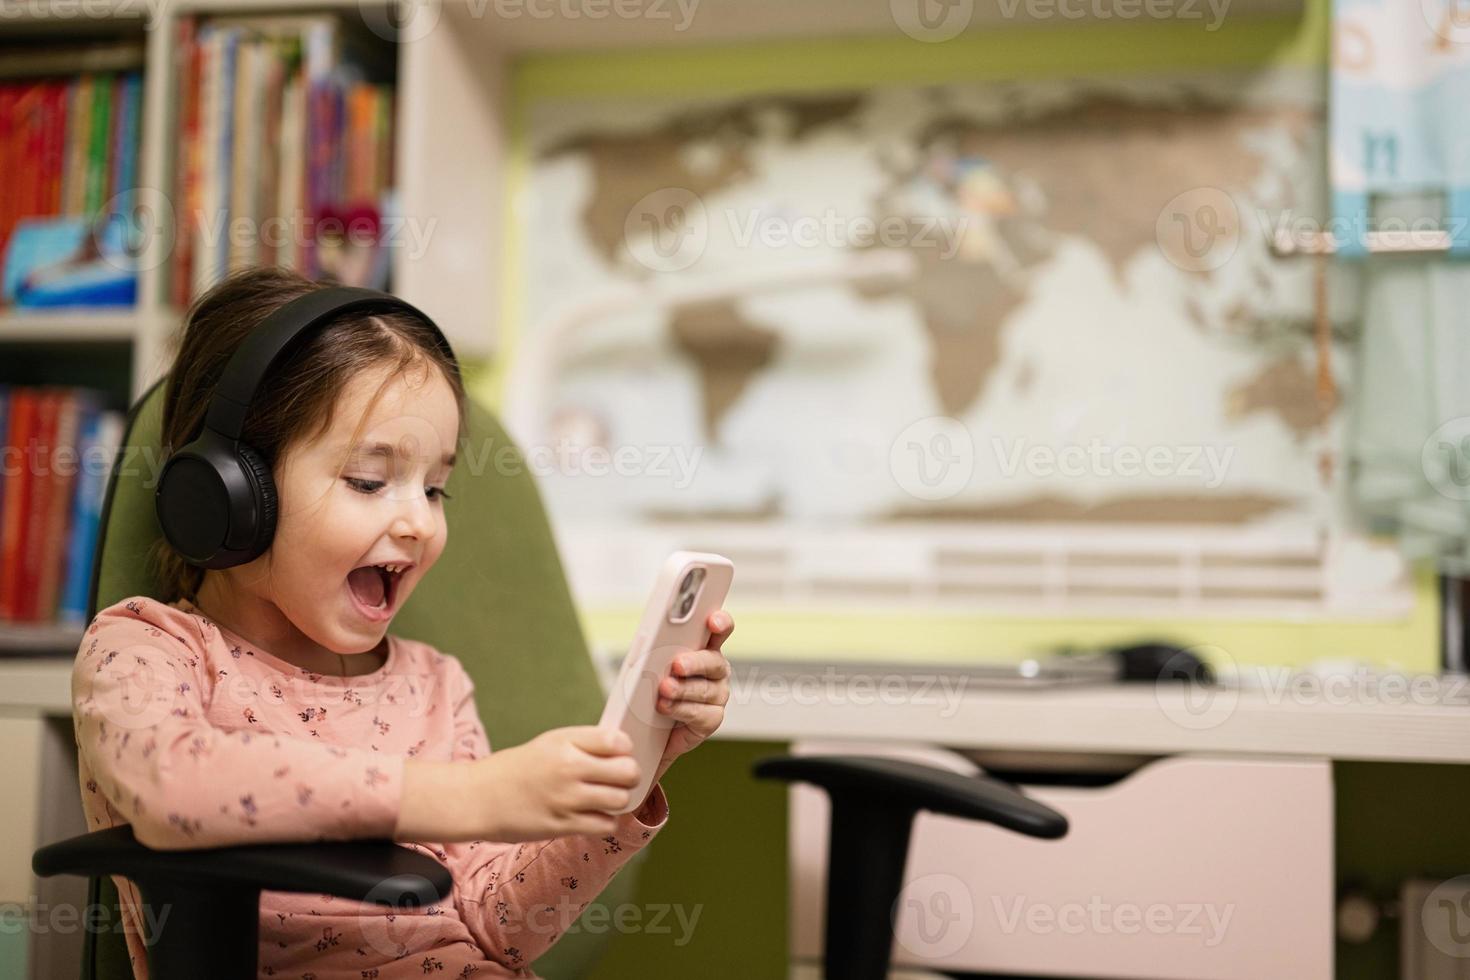 Little girl wear headphones watching cartoons or kid video on her phone. photo